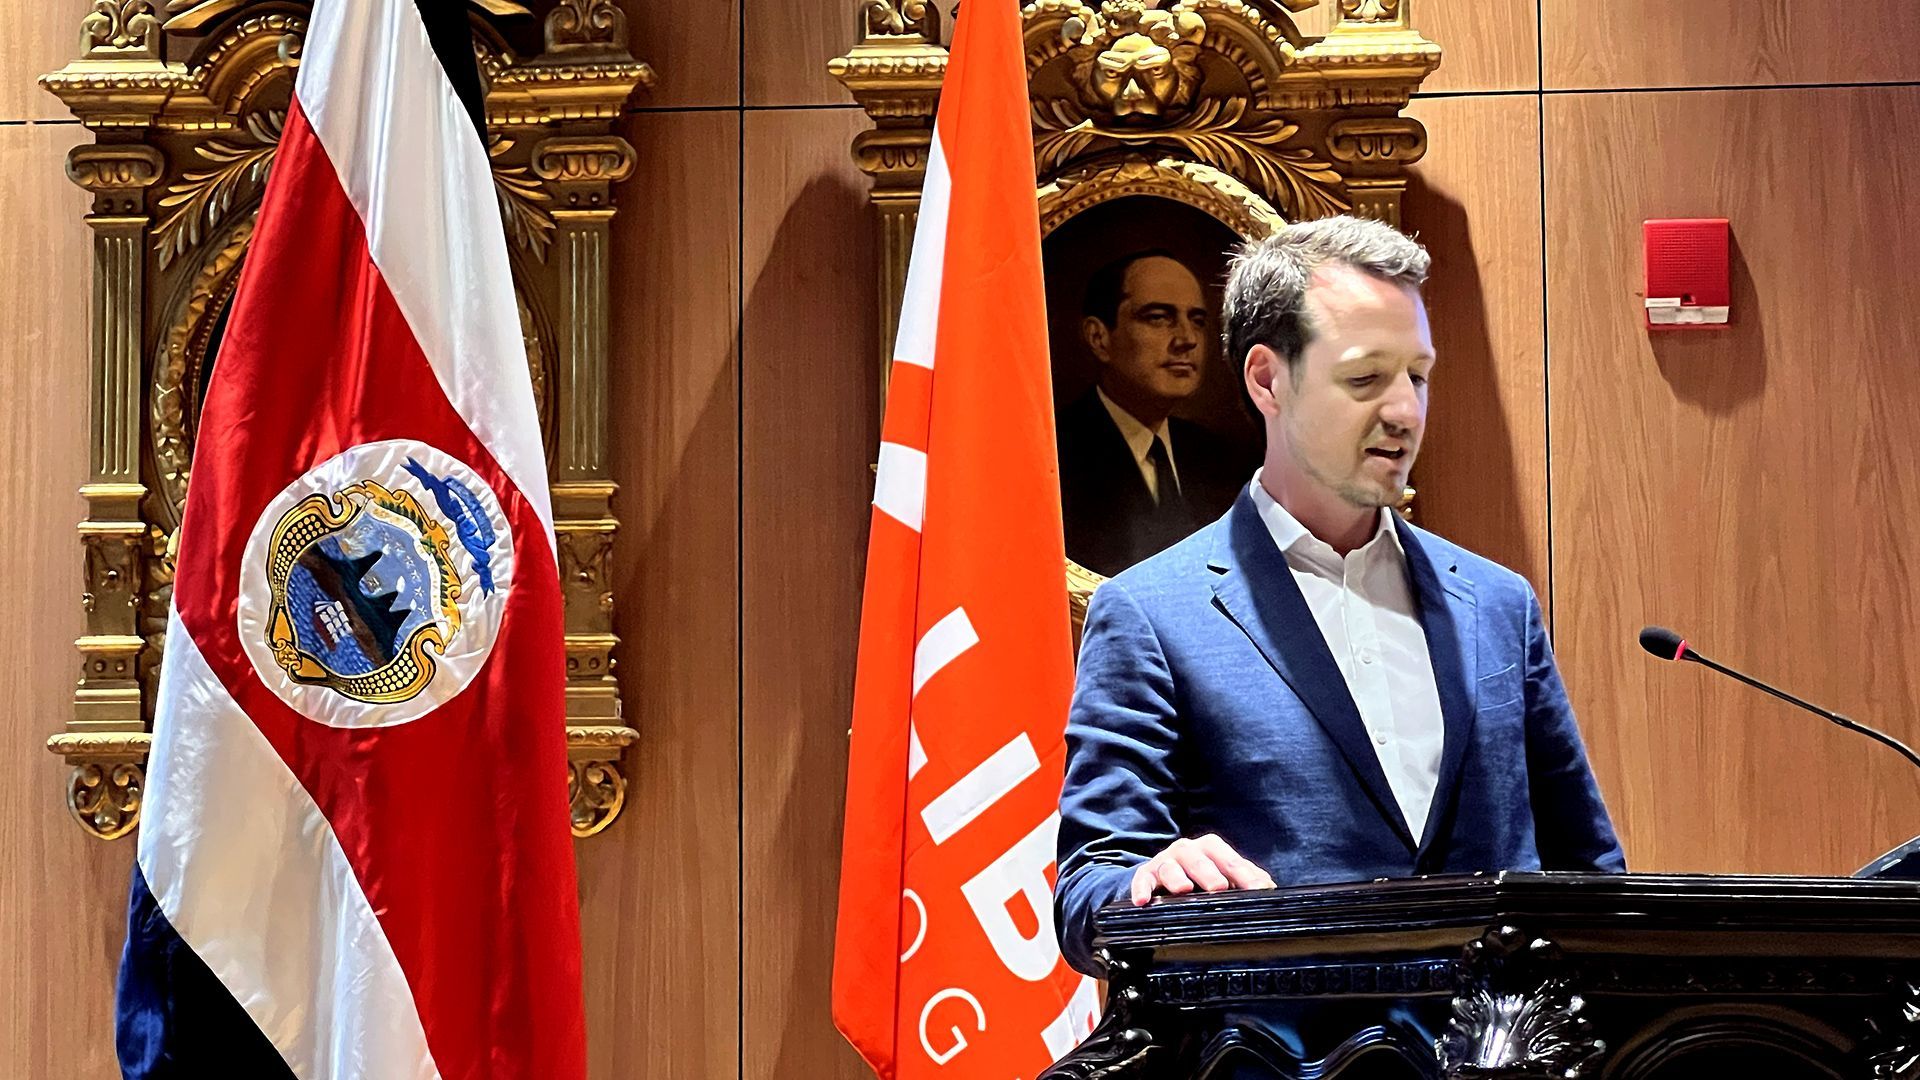 Prince Filip Karađorđević of Serbia giving speech at Costa Rica Legislative Assembly